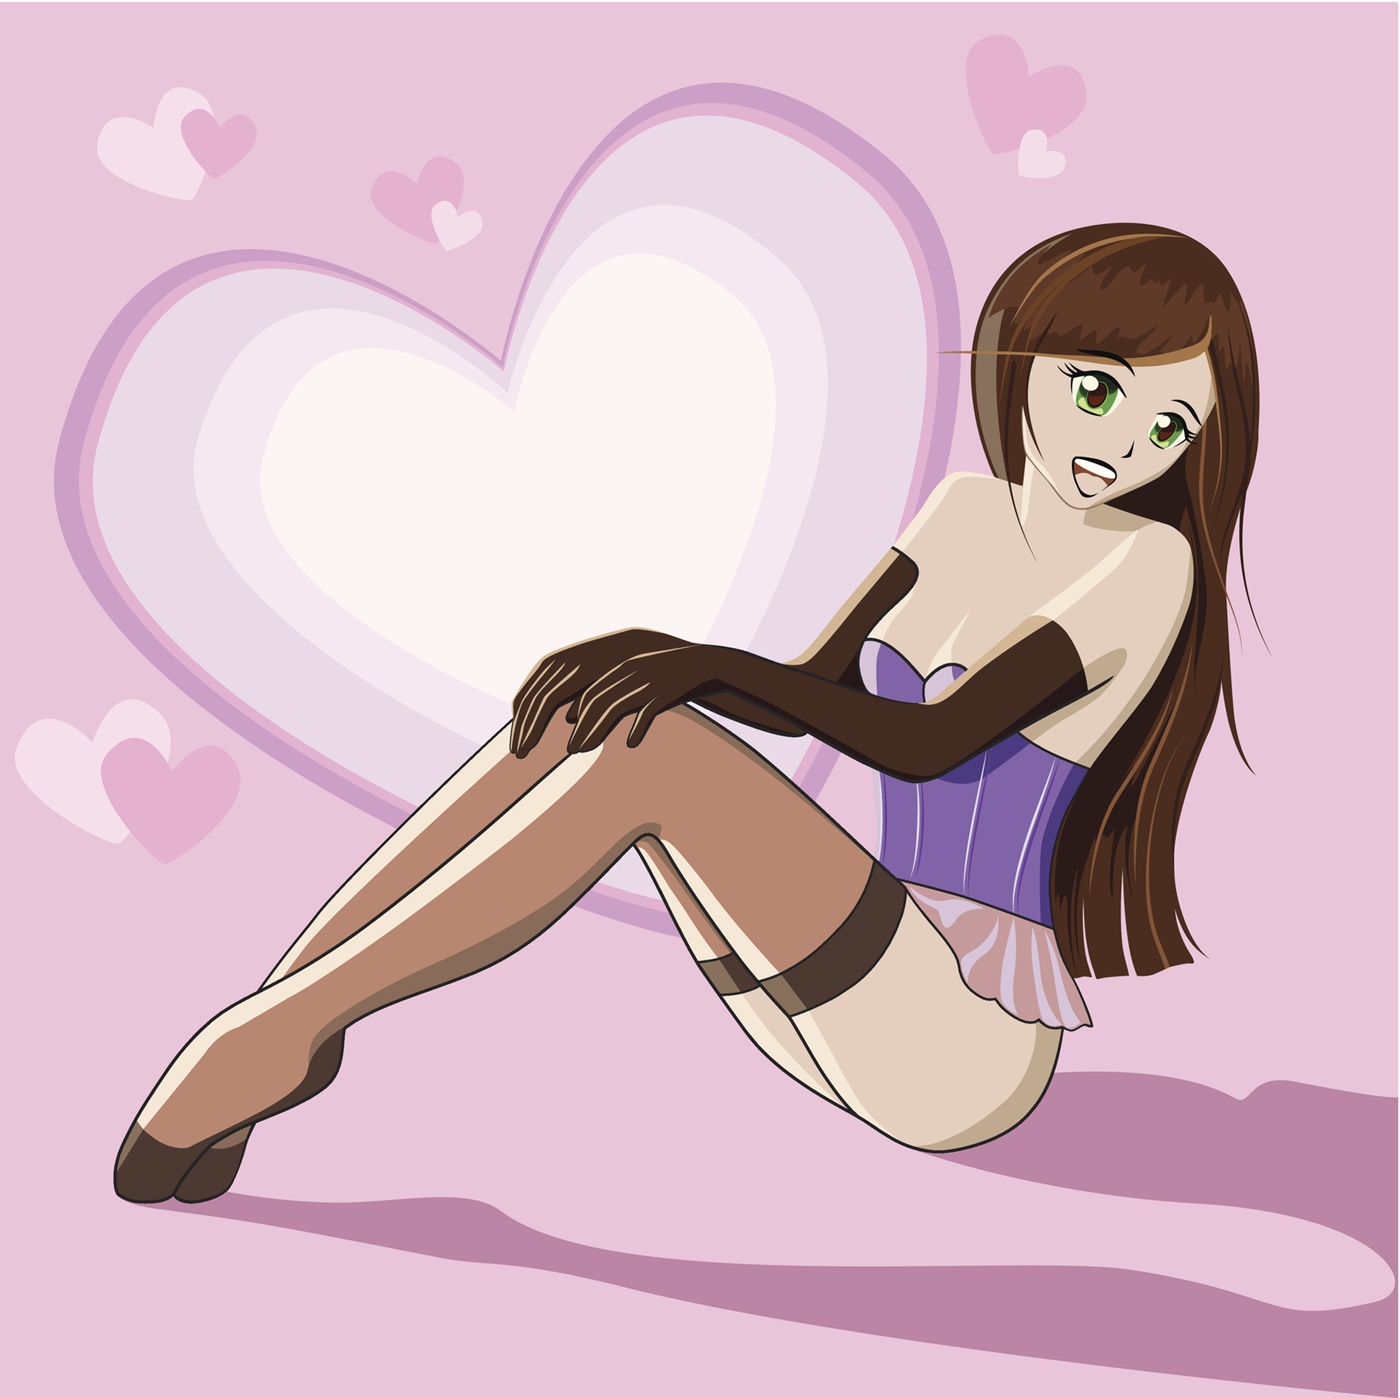 Manga-Style Illustration of Girl in Stockings